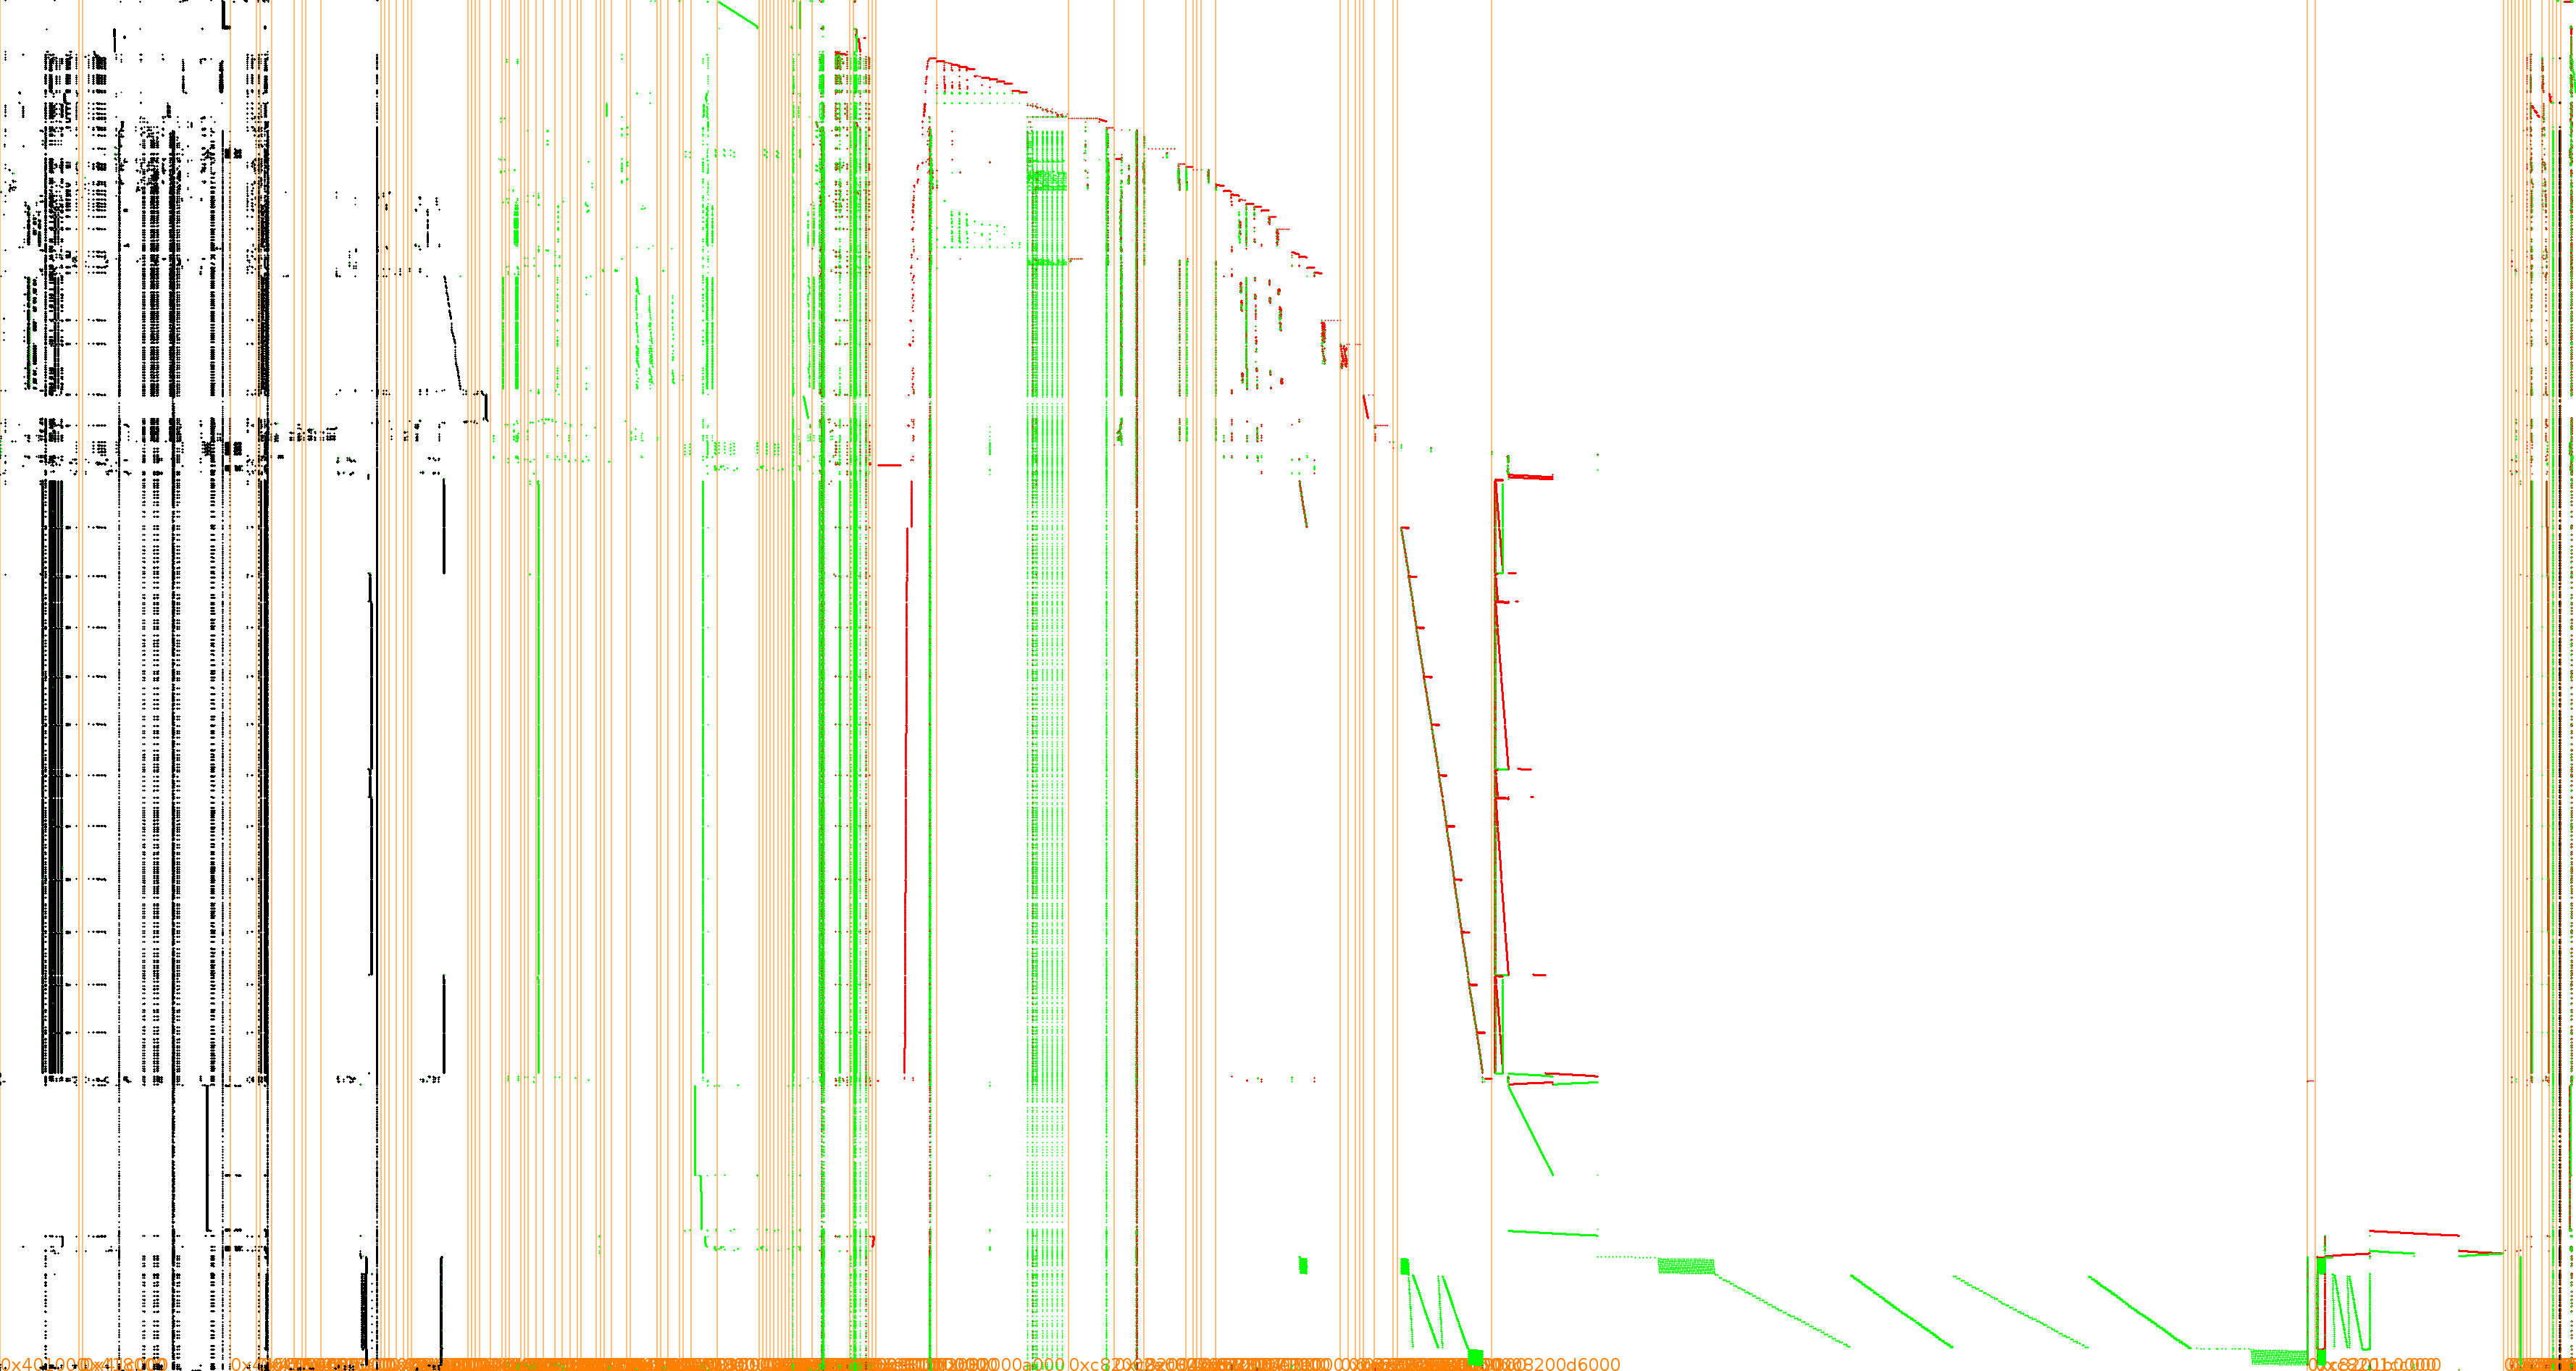 Visualization of one OpenWhiteBox Chow execution trace